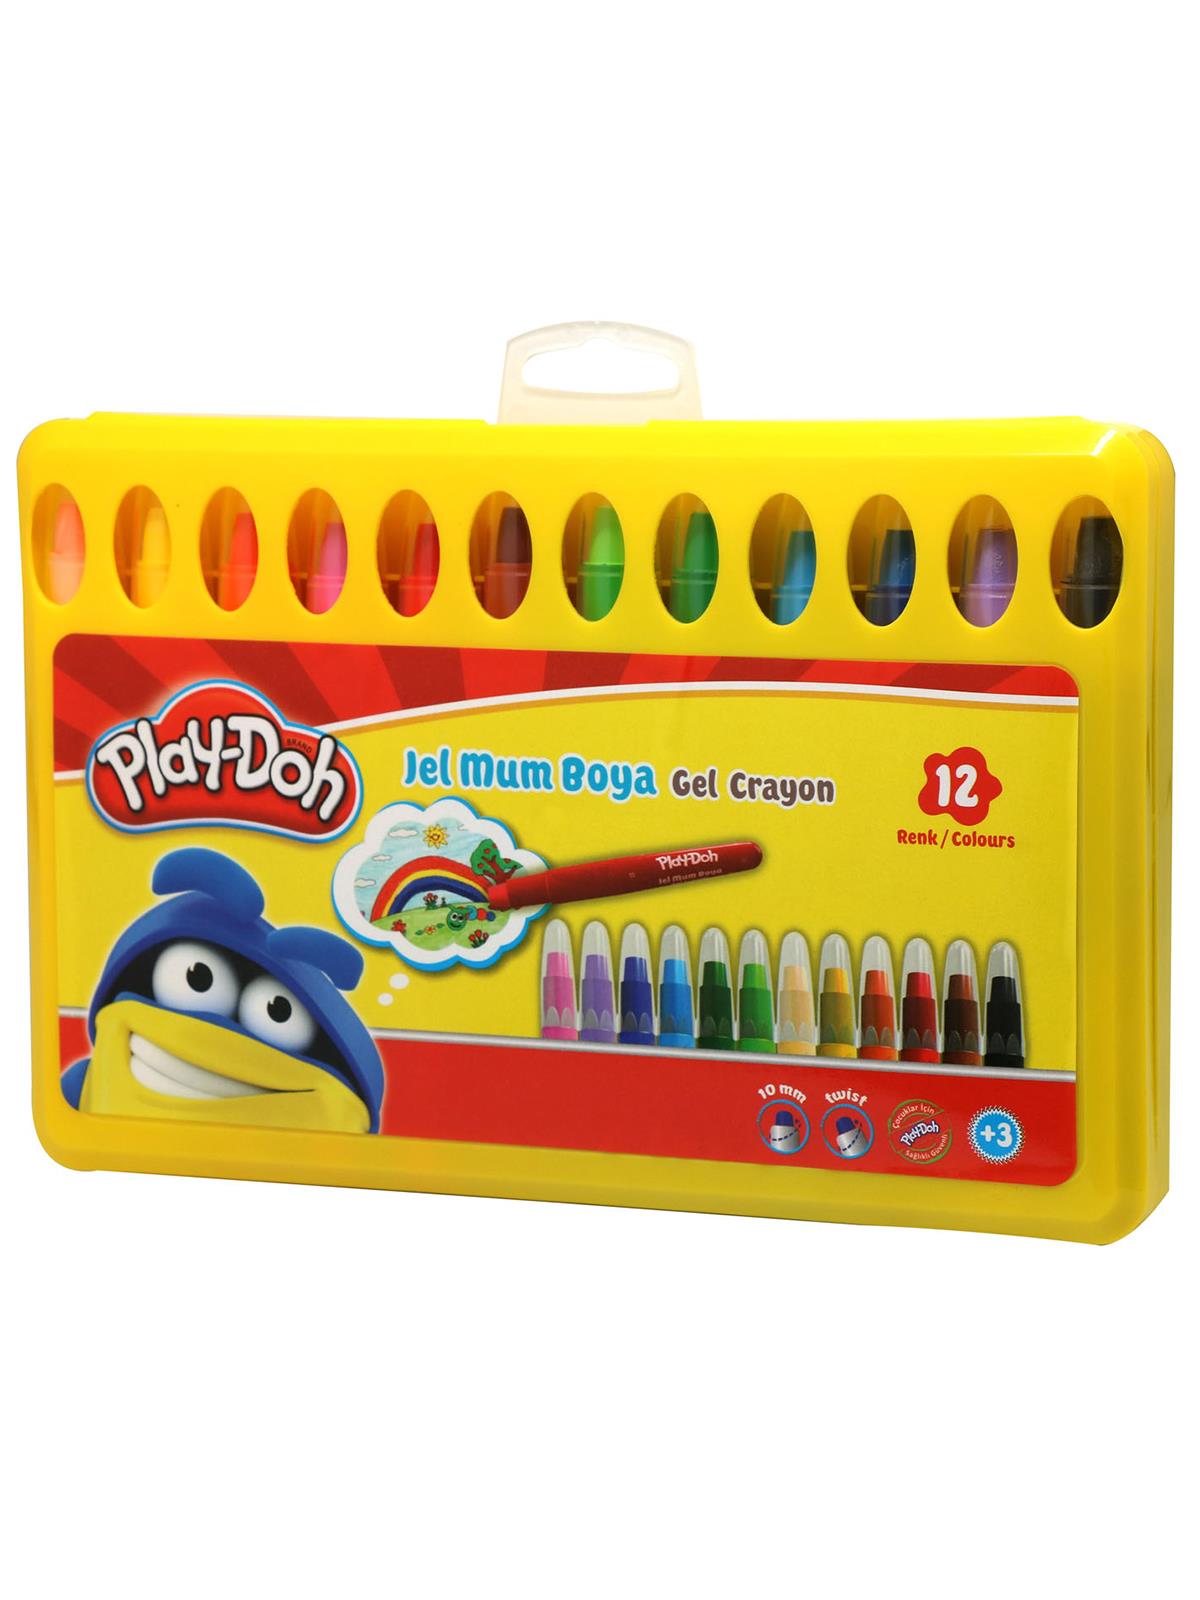 Play-Doh Crayon Jel Mum Boya 12 Renk